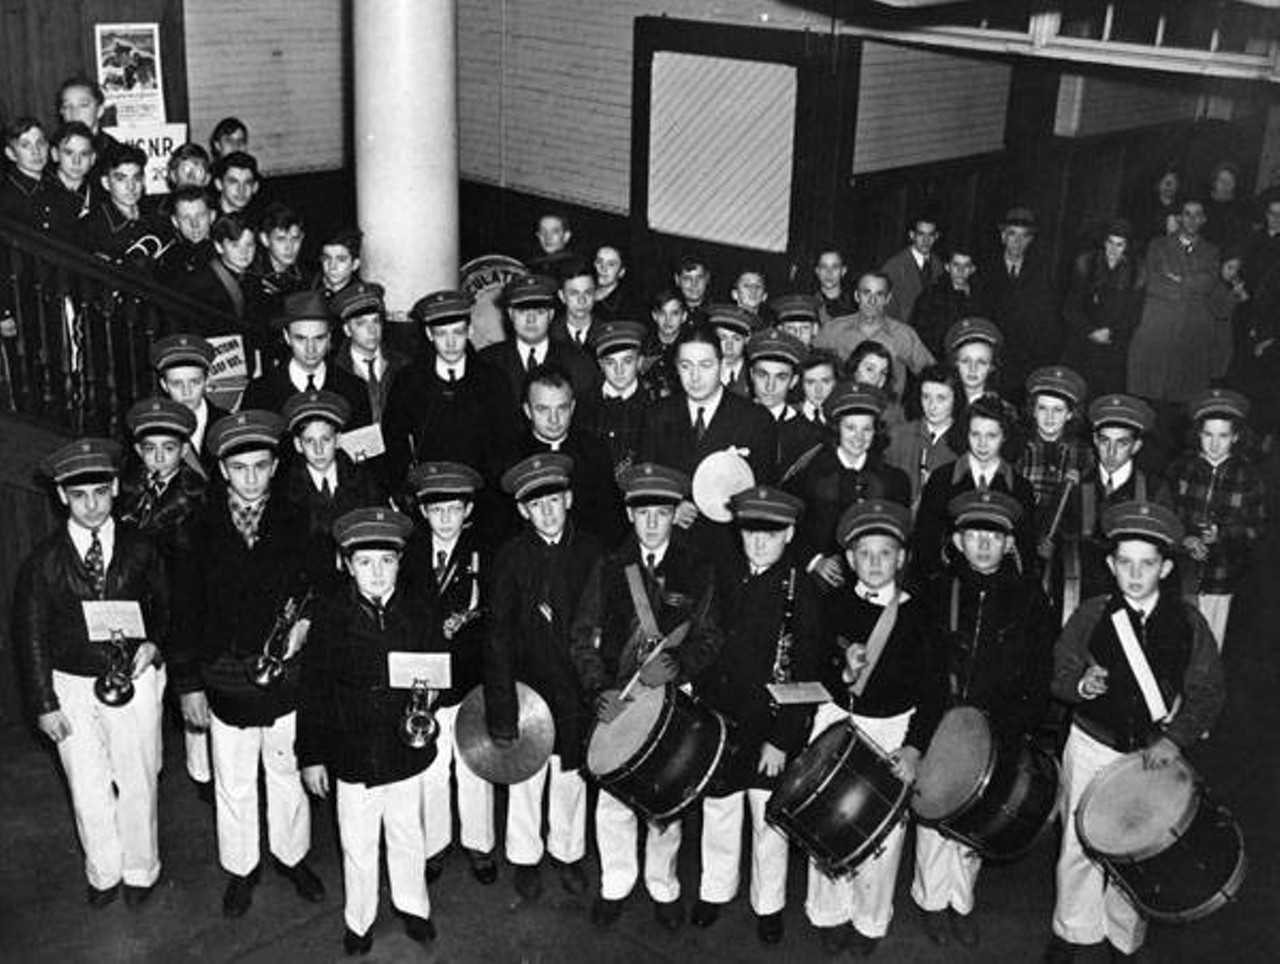  Wurlitzer Band, 1941